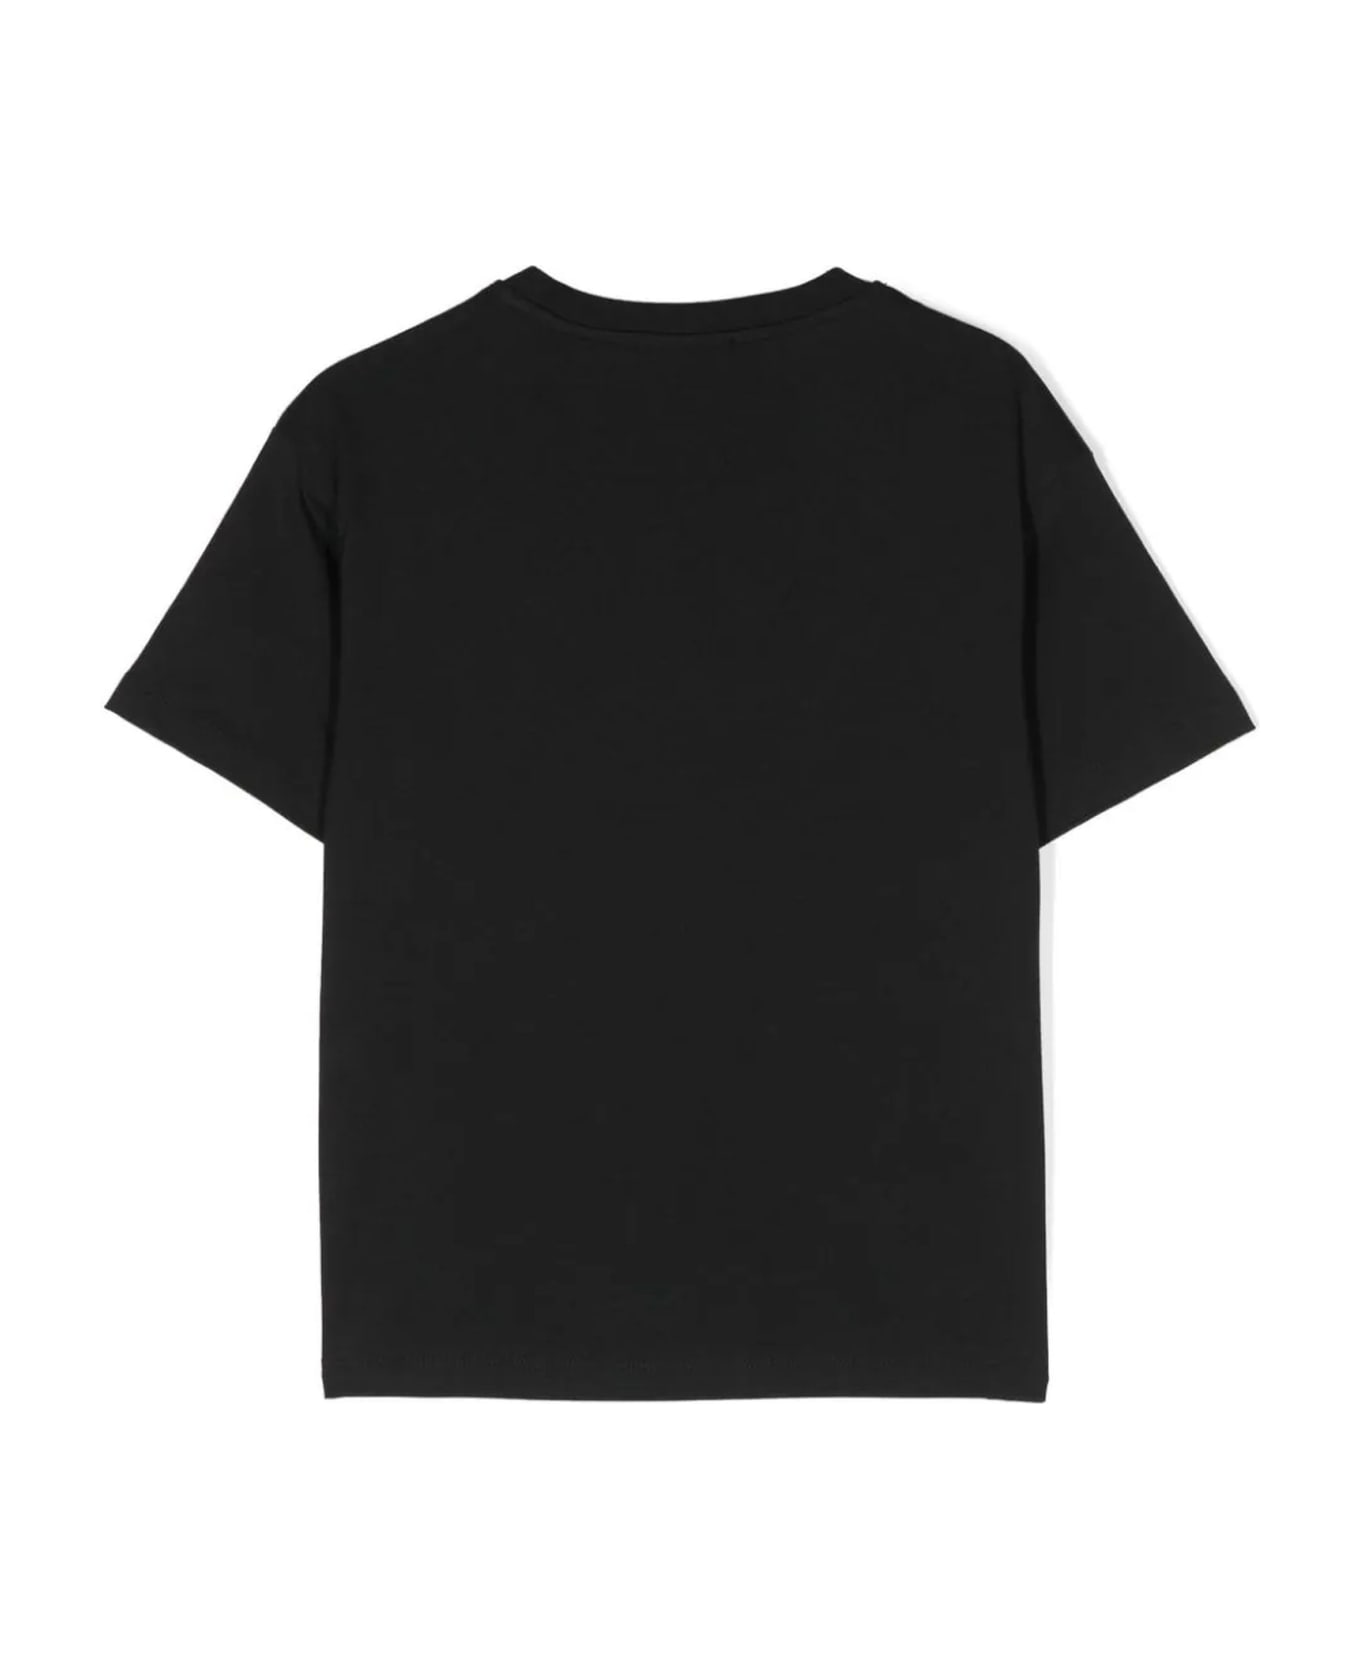 Balmain T-shirts And Polos Black - Black